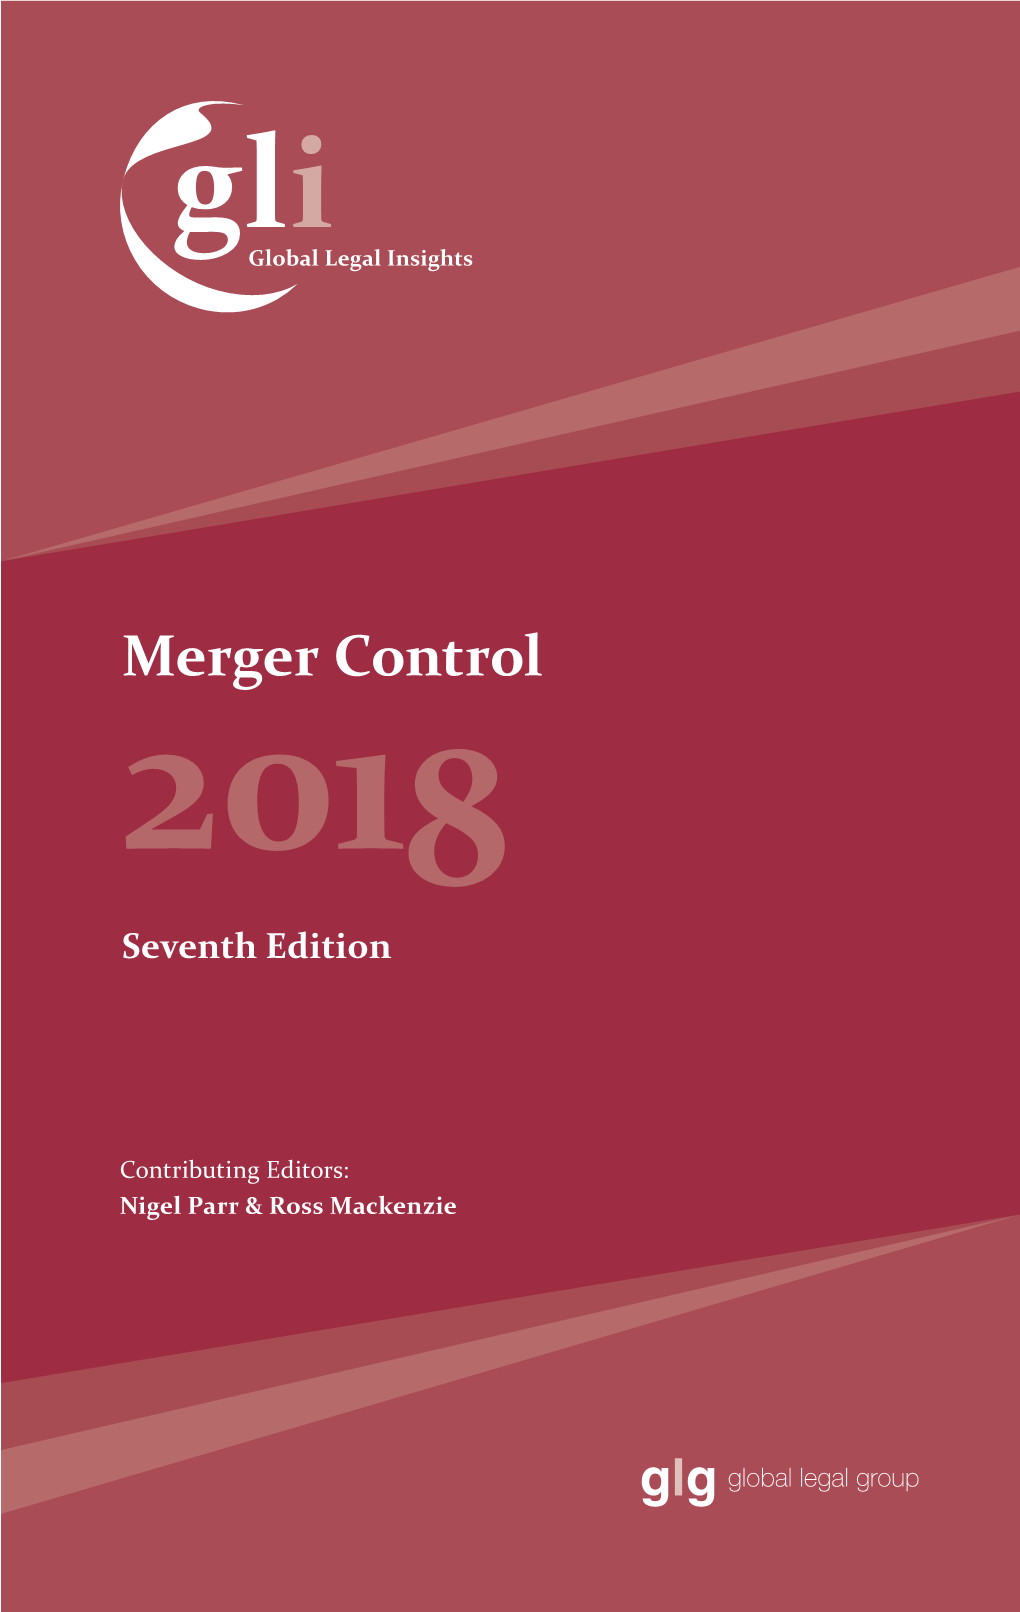 Merger Control 2018 Seventh Edition